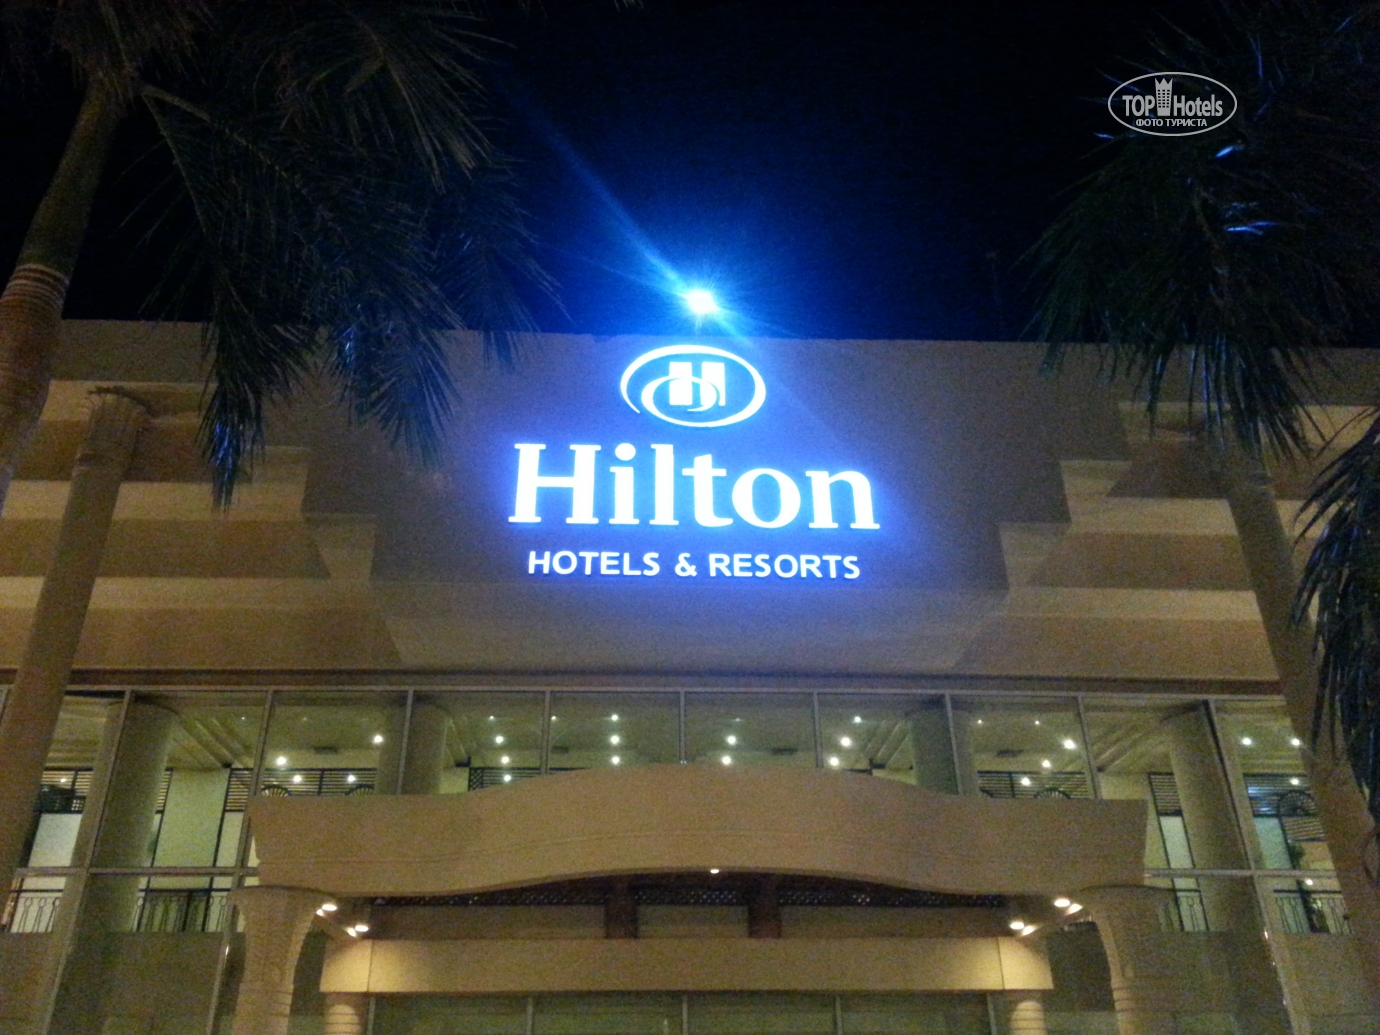 Hilton Hotels Gui Pastebin - roblox hilton hotels v4 uncopylocked roblox promo codes